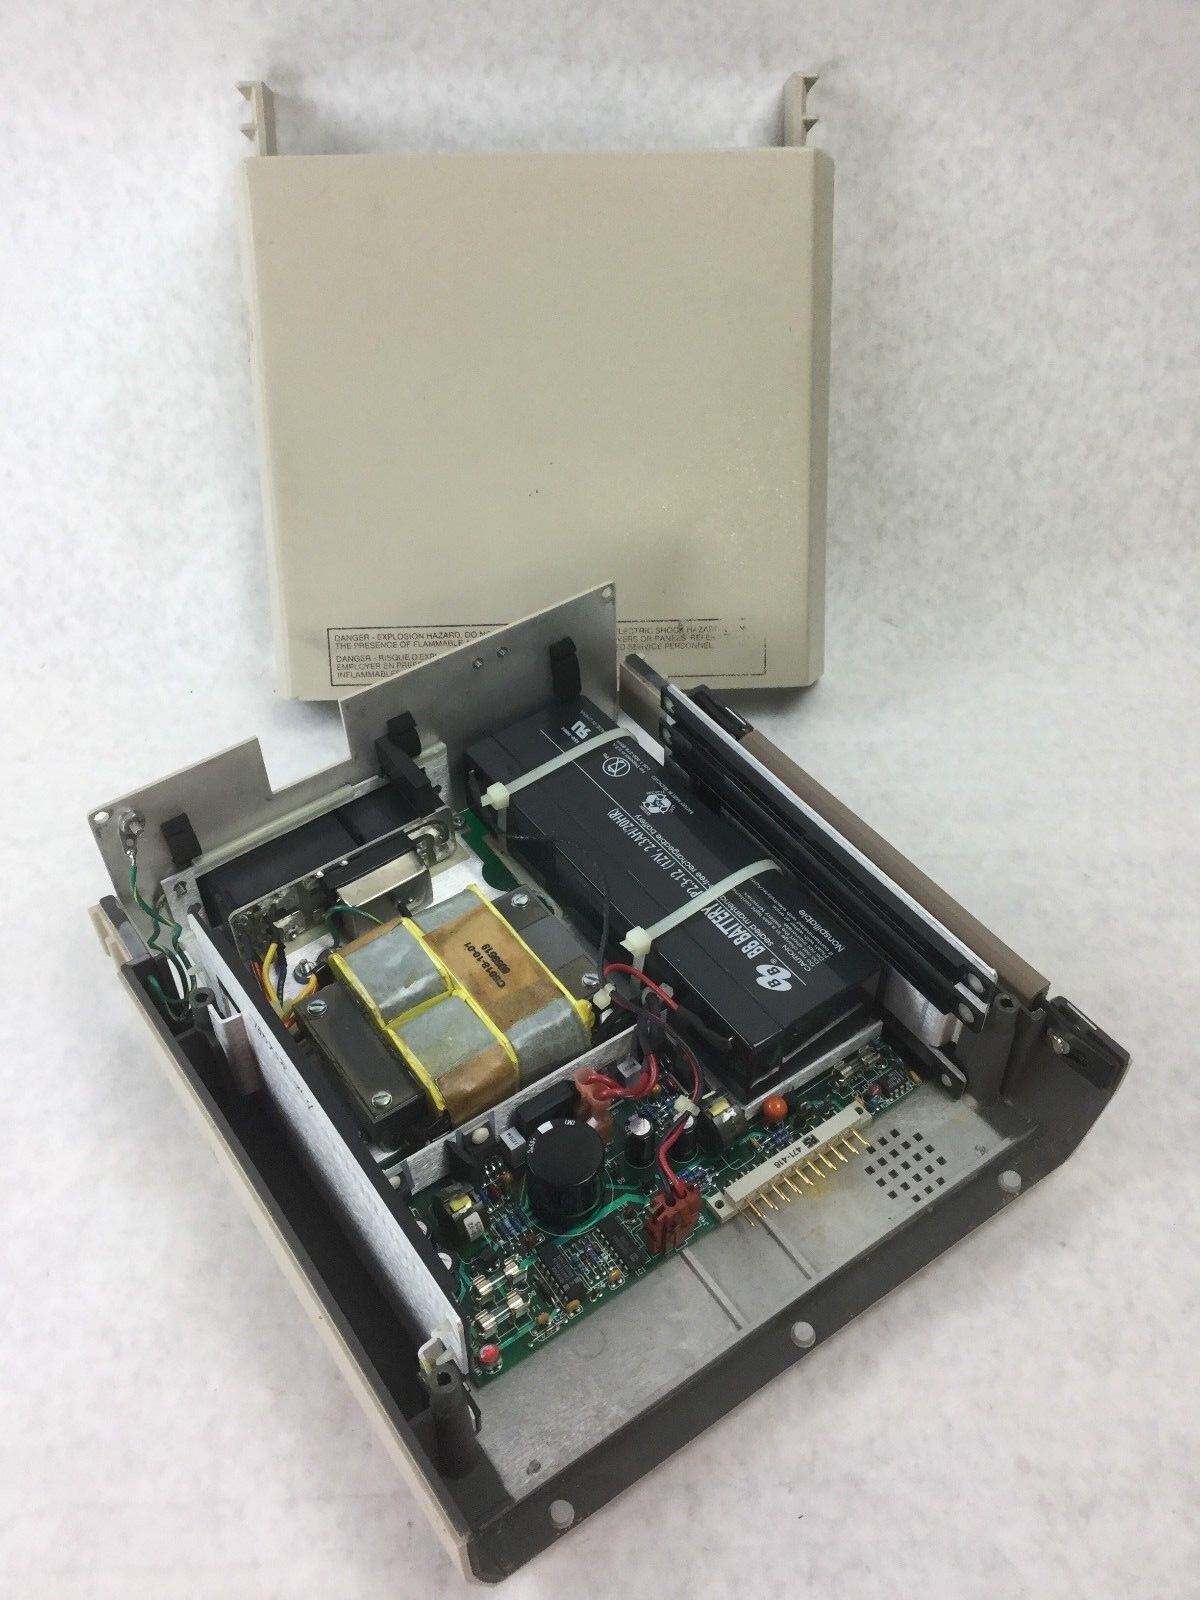 Power Supply Unit and Case for Novametrix 840, PtcO2, PtcCO2 Monitors